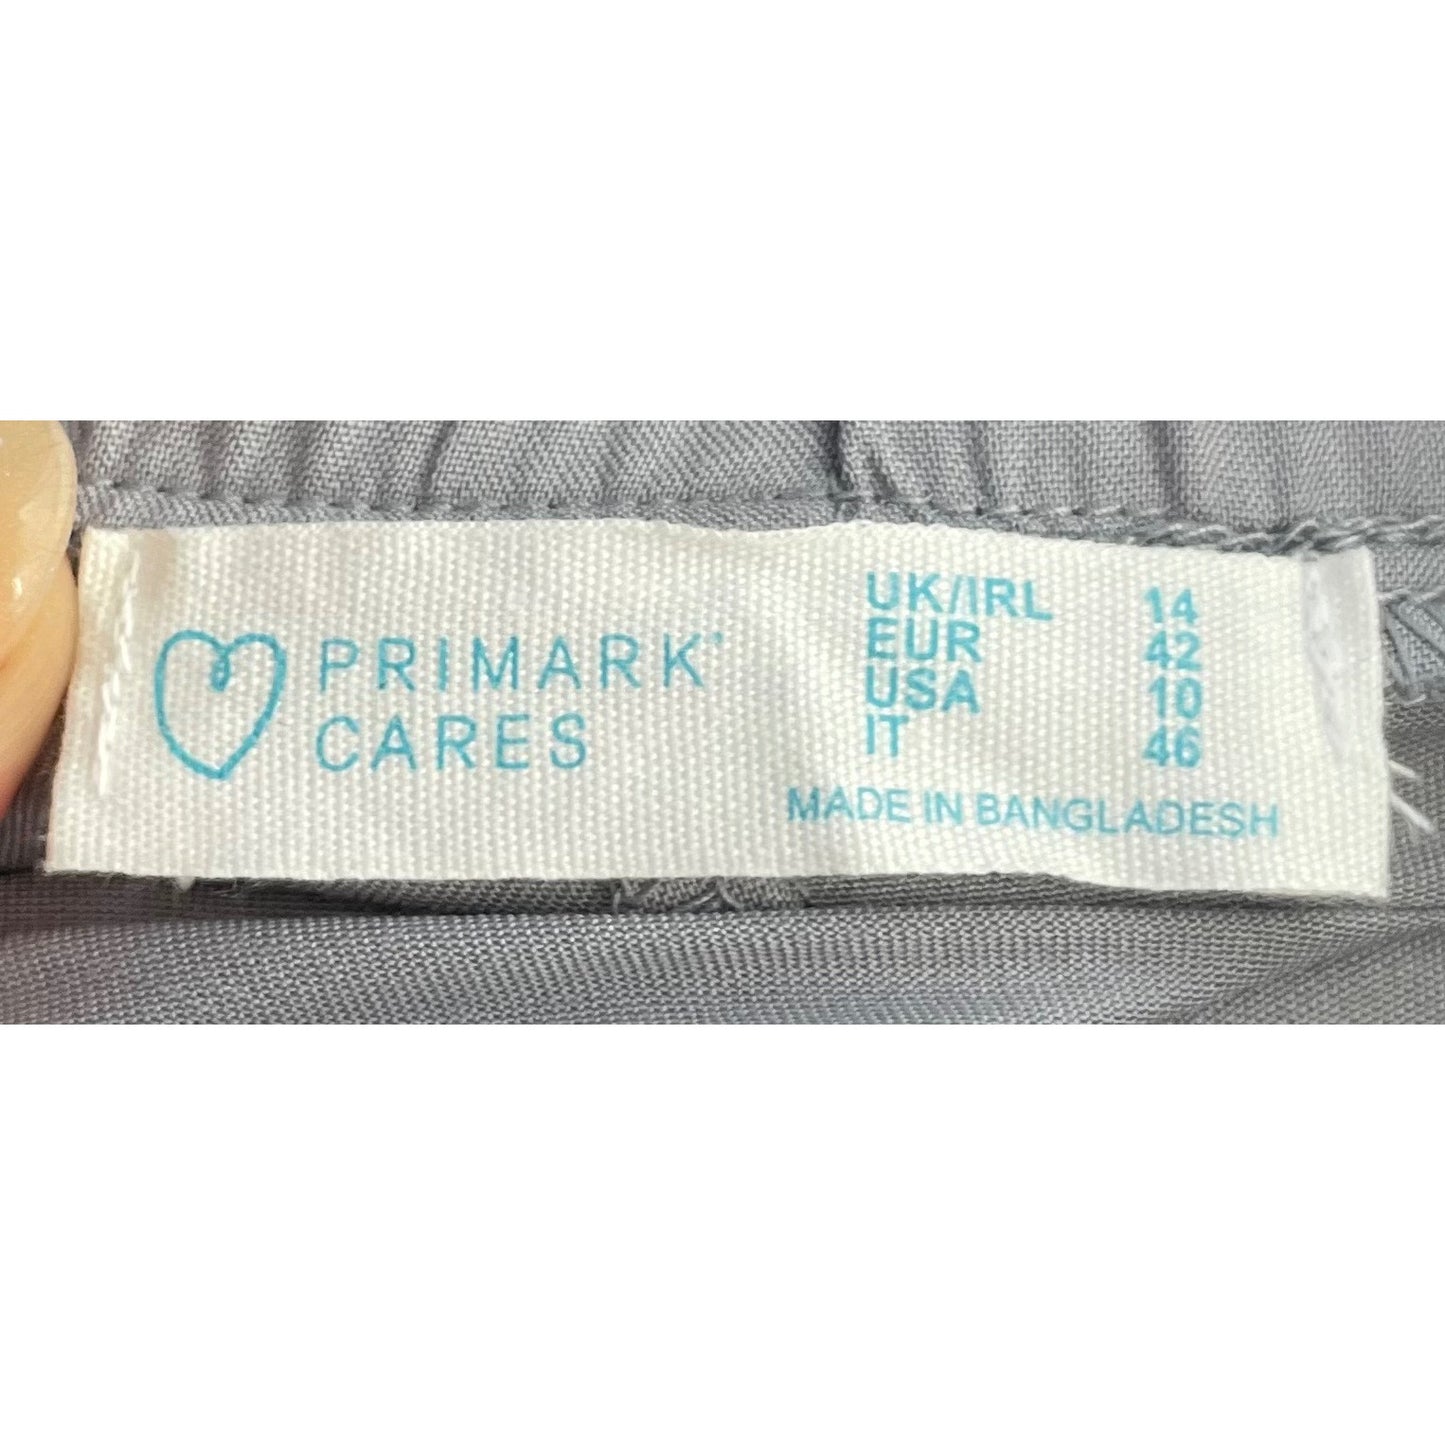 Primark Cares Women's Size 10 Light Greyish/Blue Mock Linen Elastic Waist Band Pants